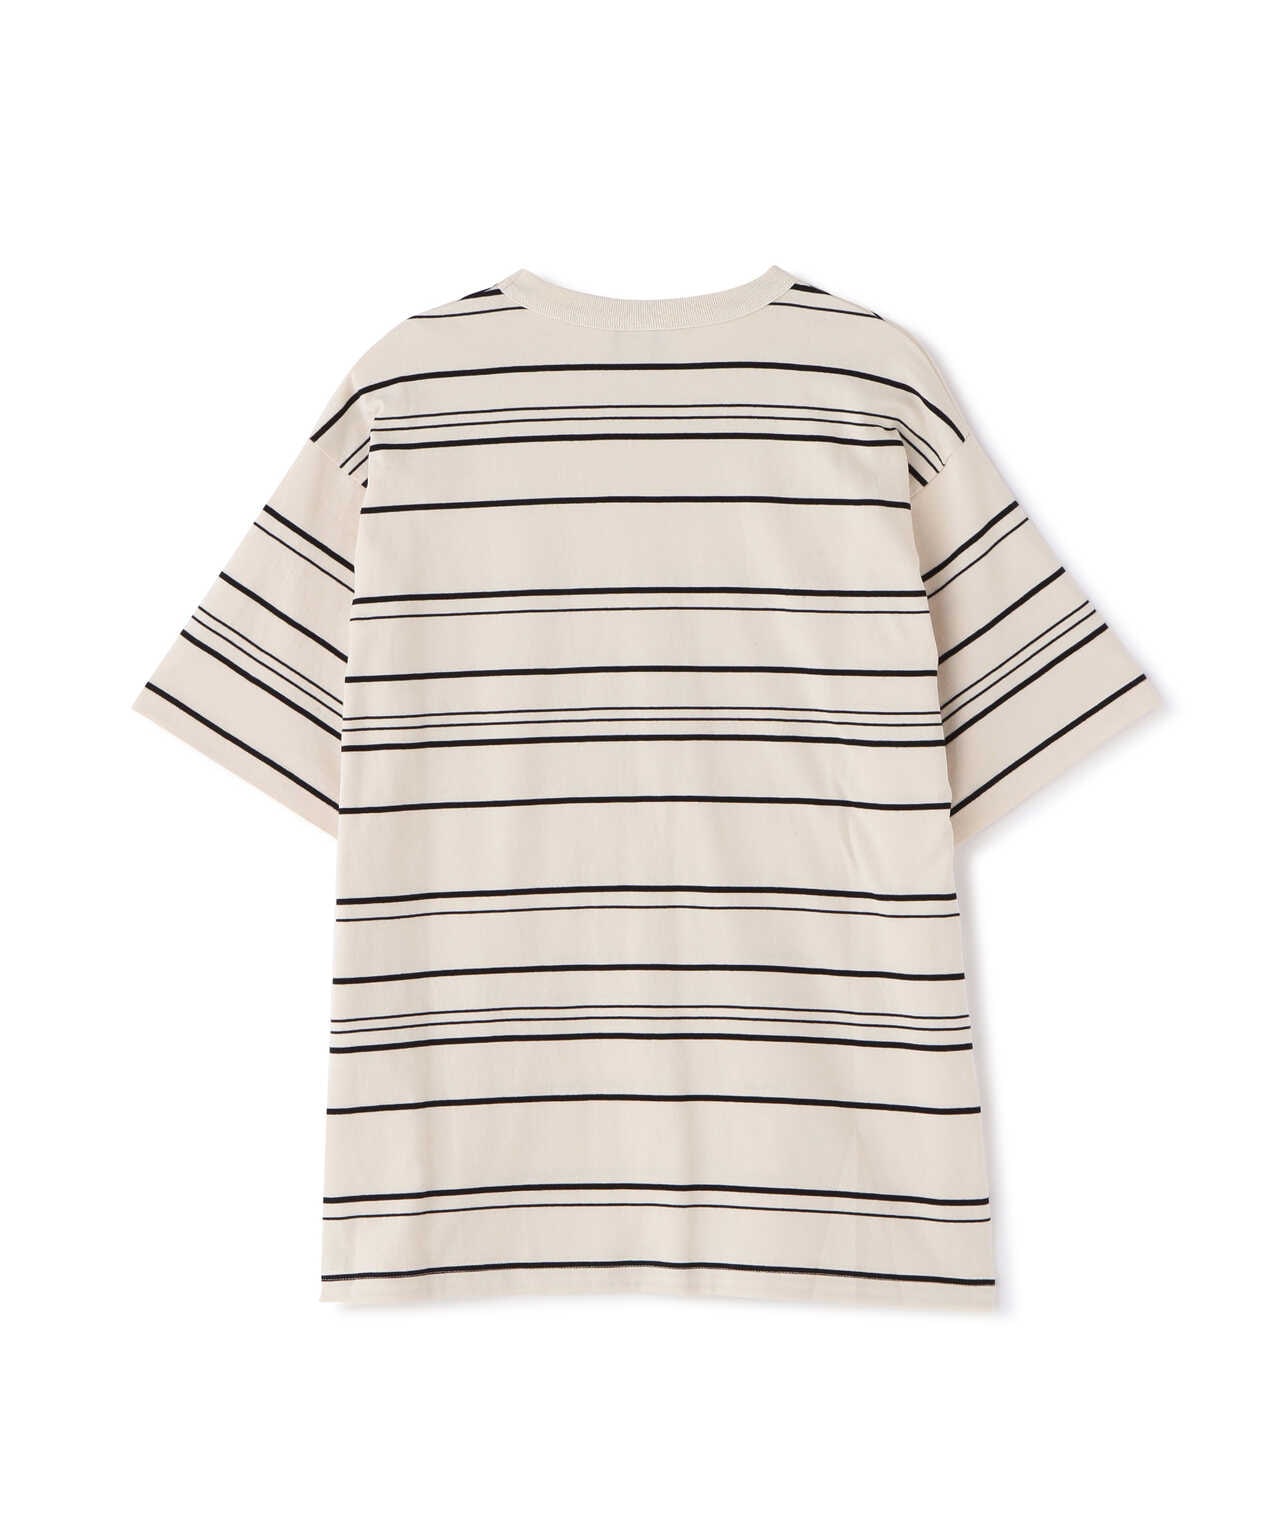 S/S Boder T-Shirt (NAVY × WHITE)